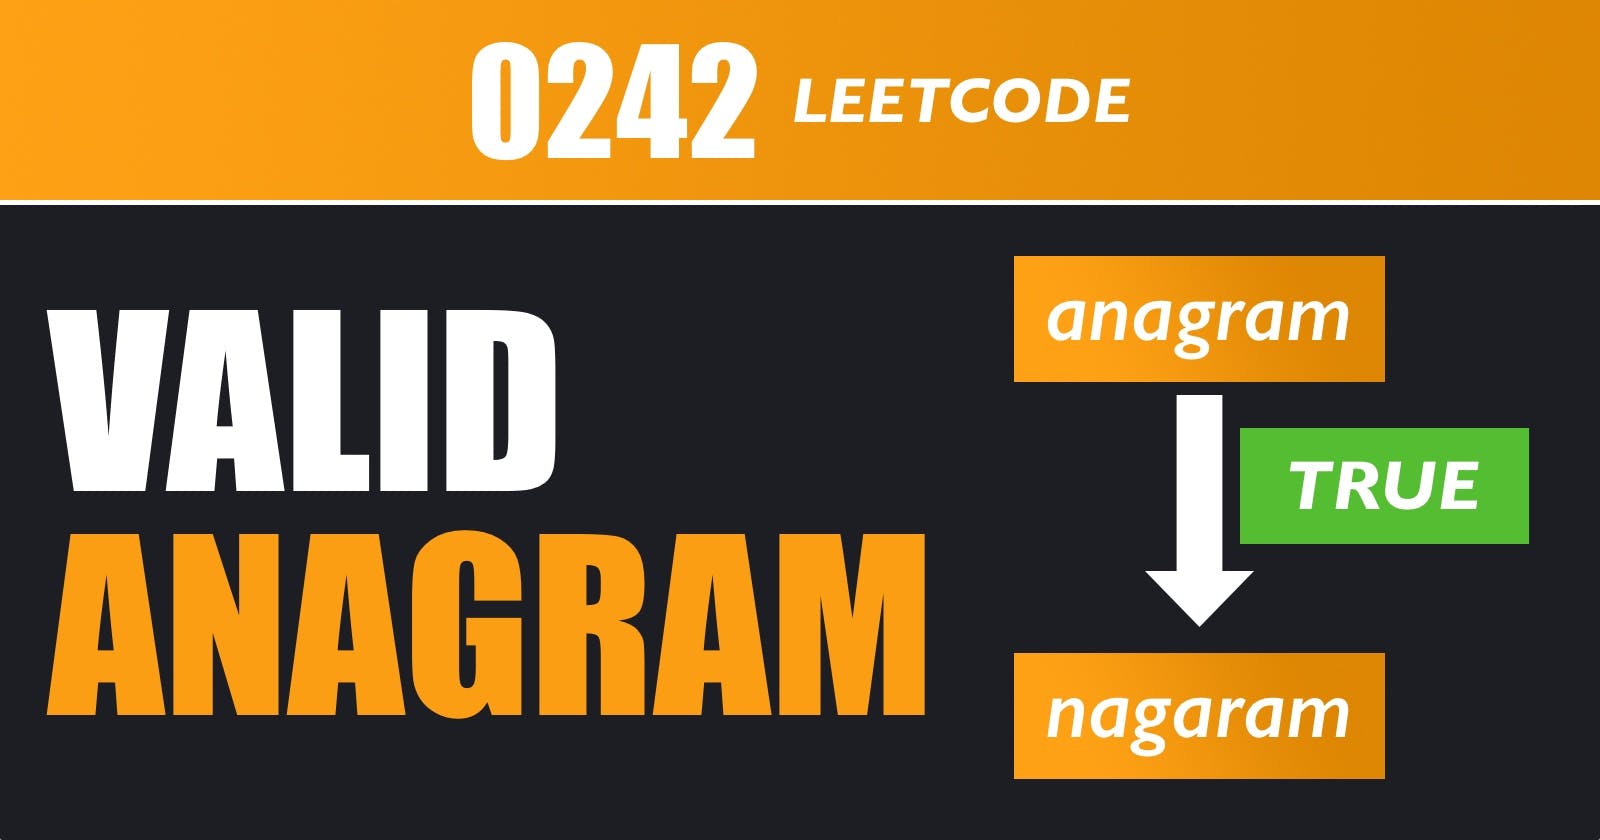 Valid Anagram - Leetcode 242